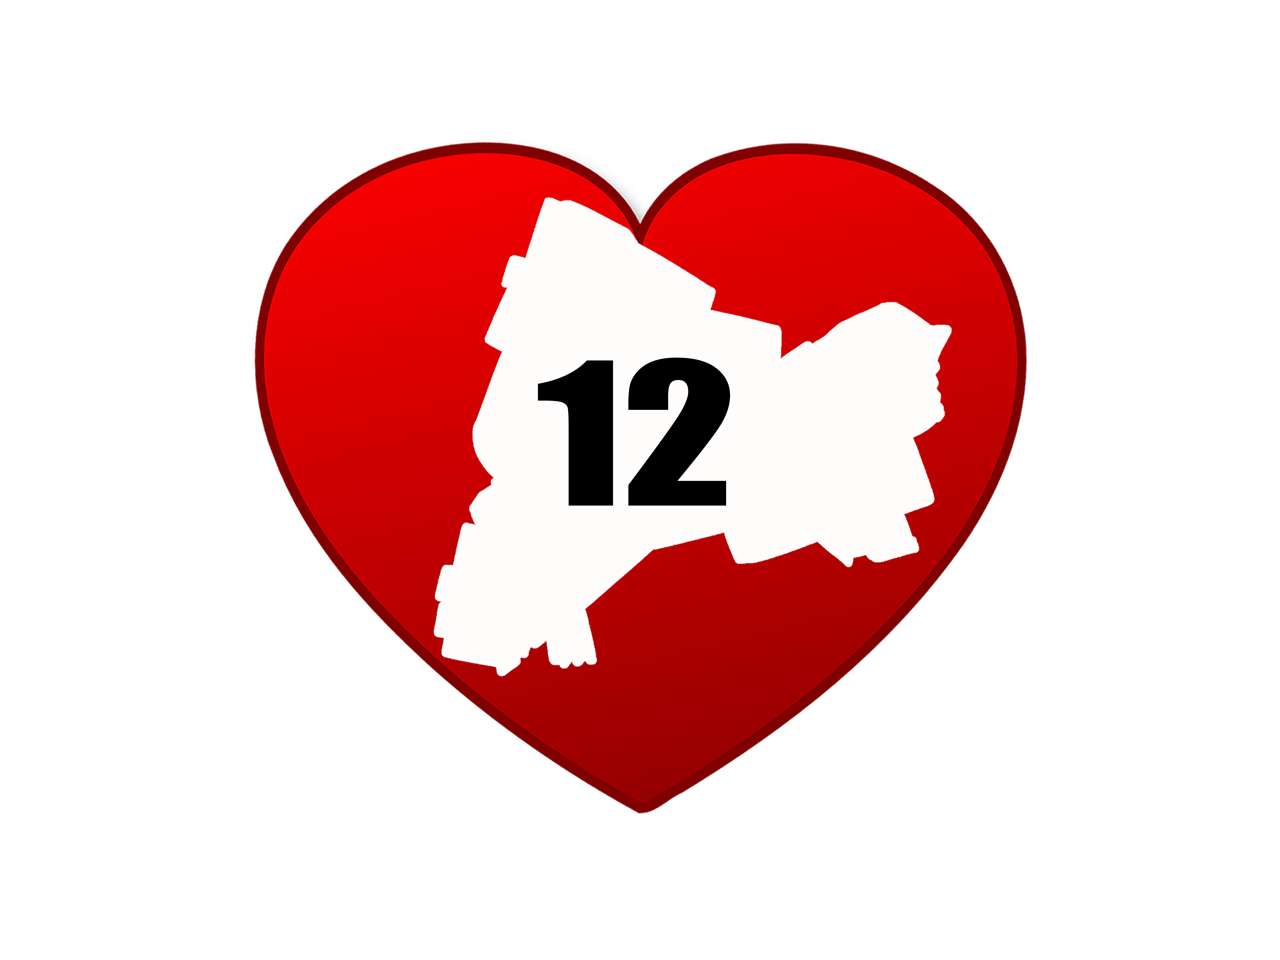 Distrito 12 Heart. puzzle online a partir de fotografia